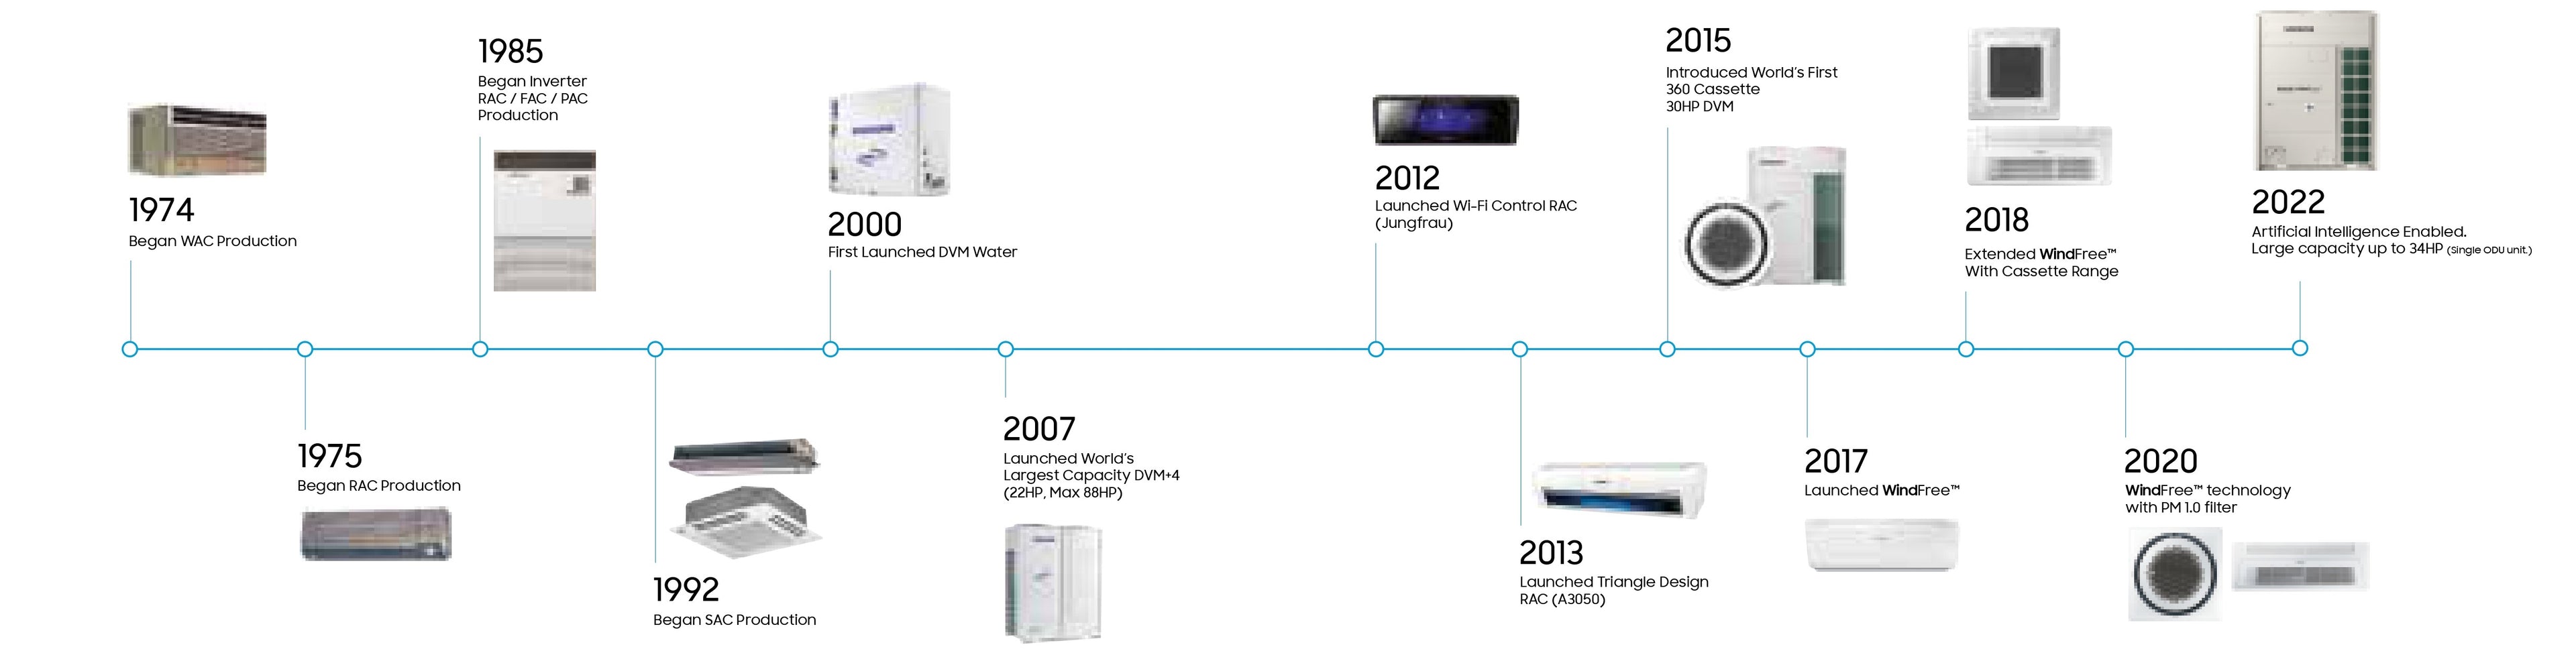 Samsung History Representation